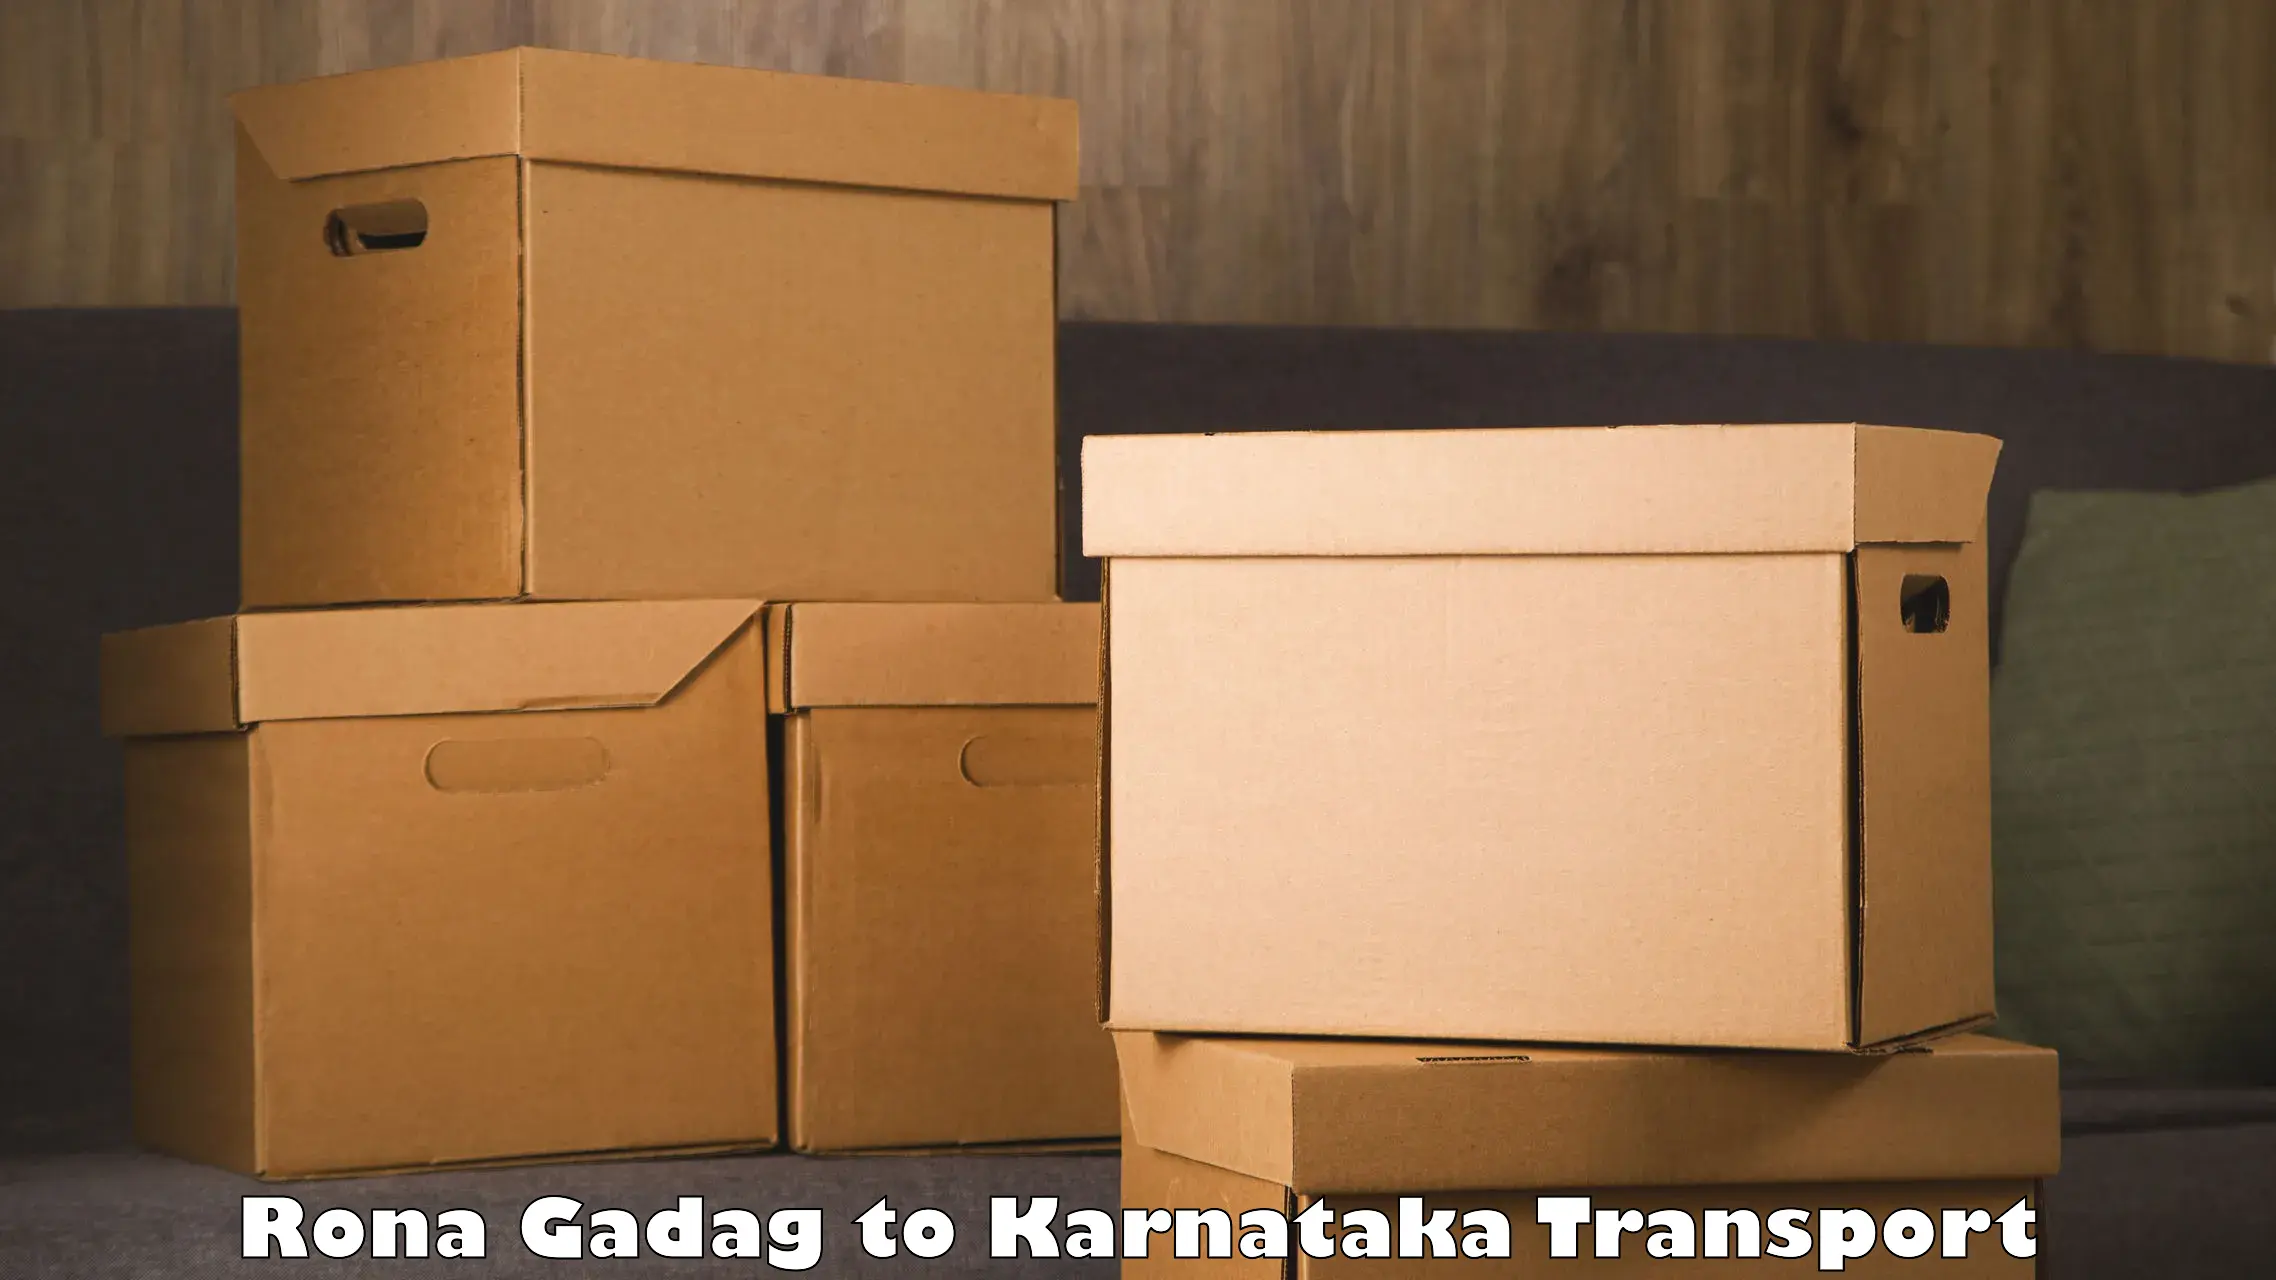 Two wheeler parcel service Rona Gadag to Mallapur